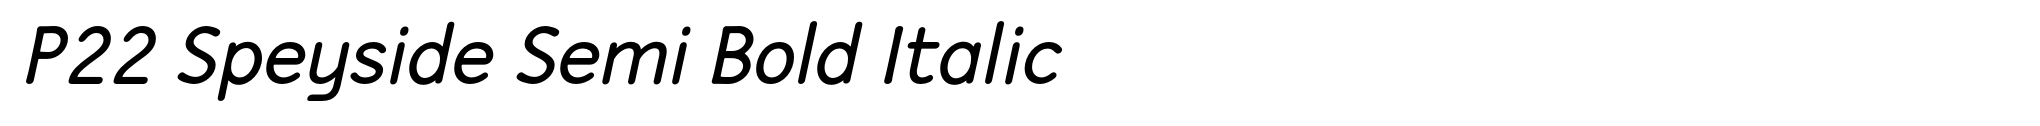 P22 Speyside Semi Bold Italic image